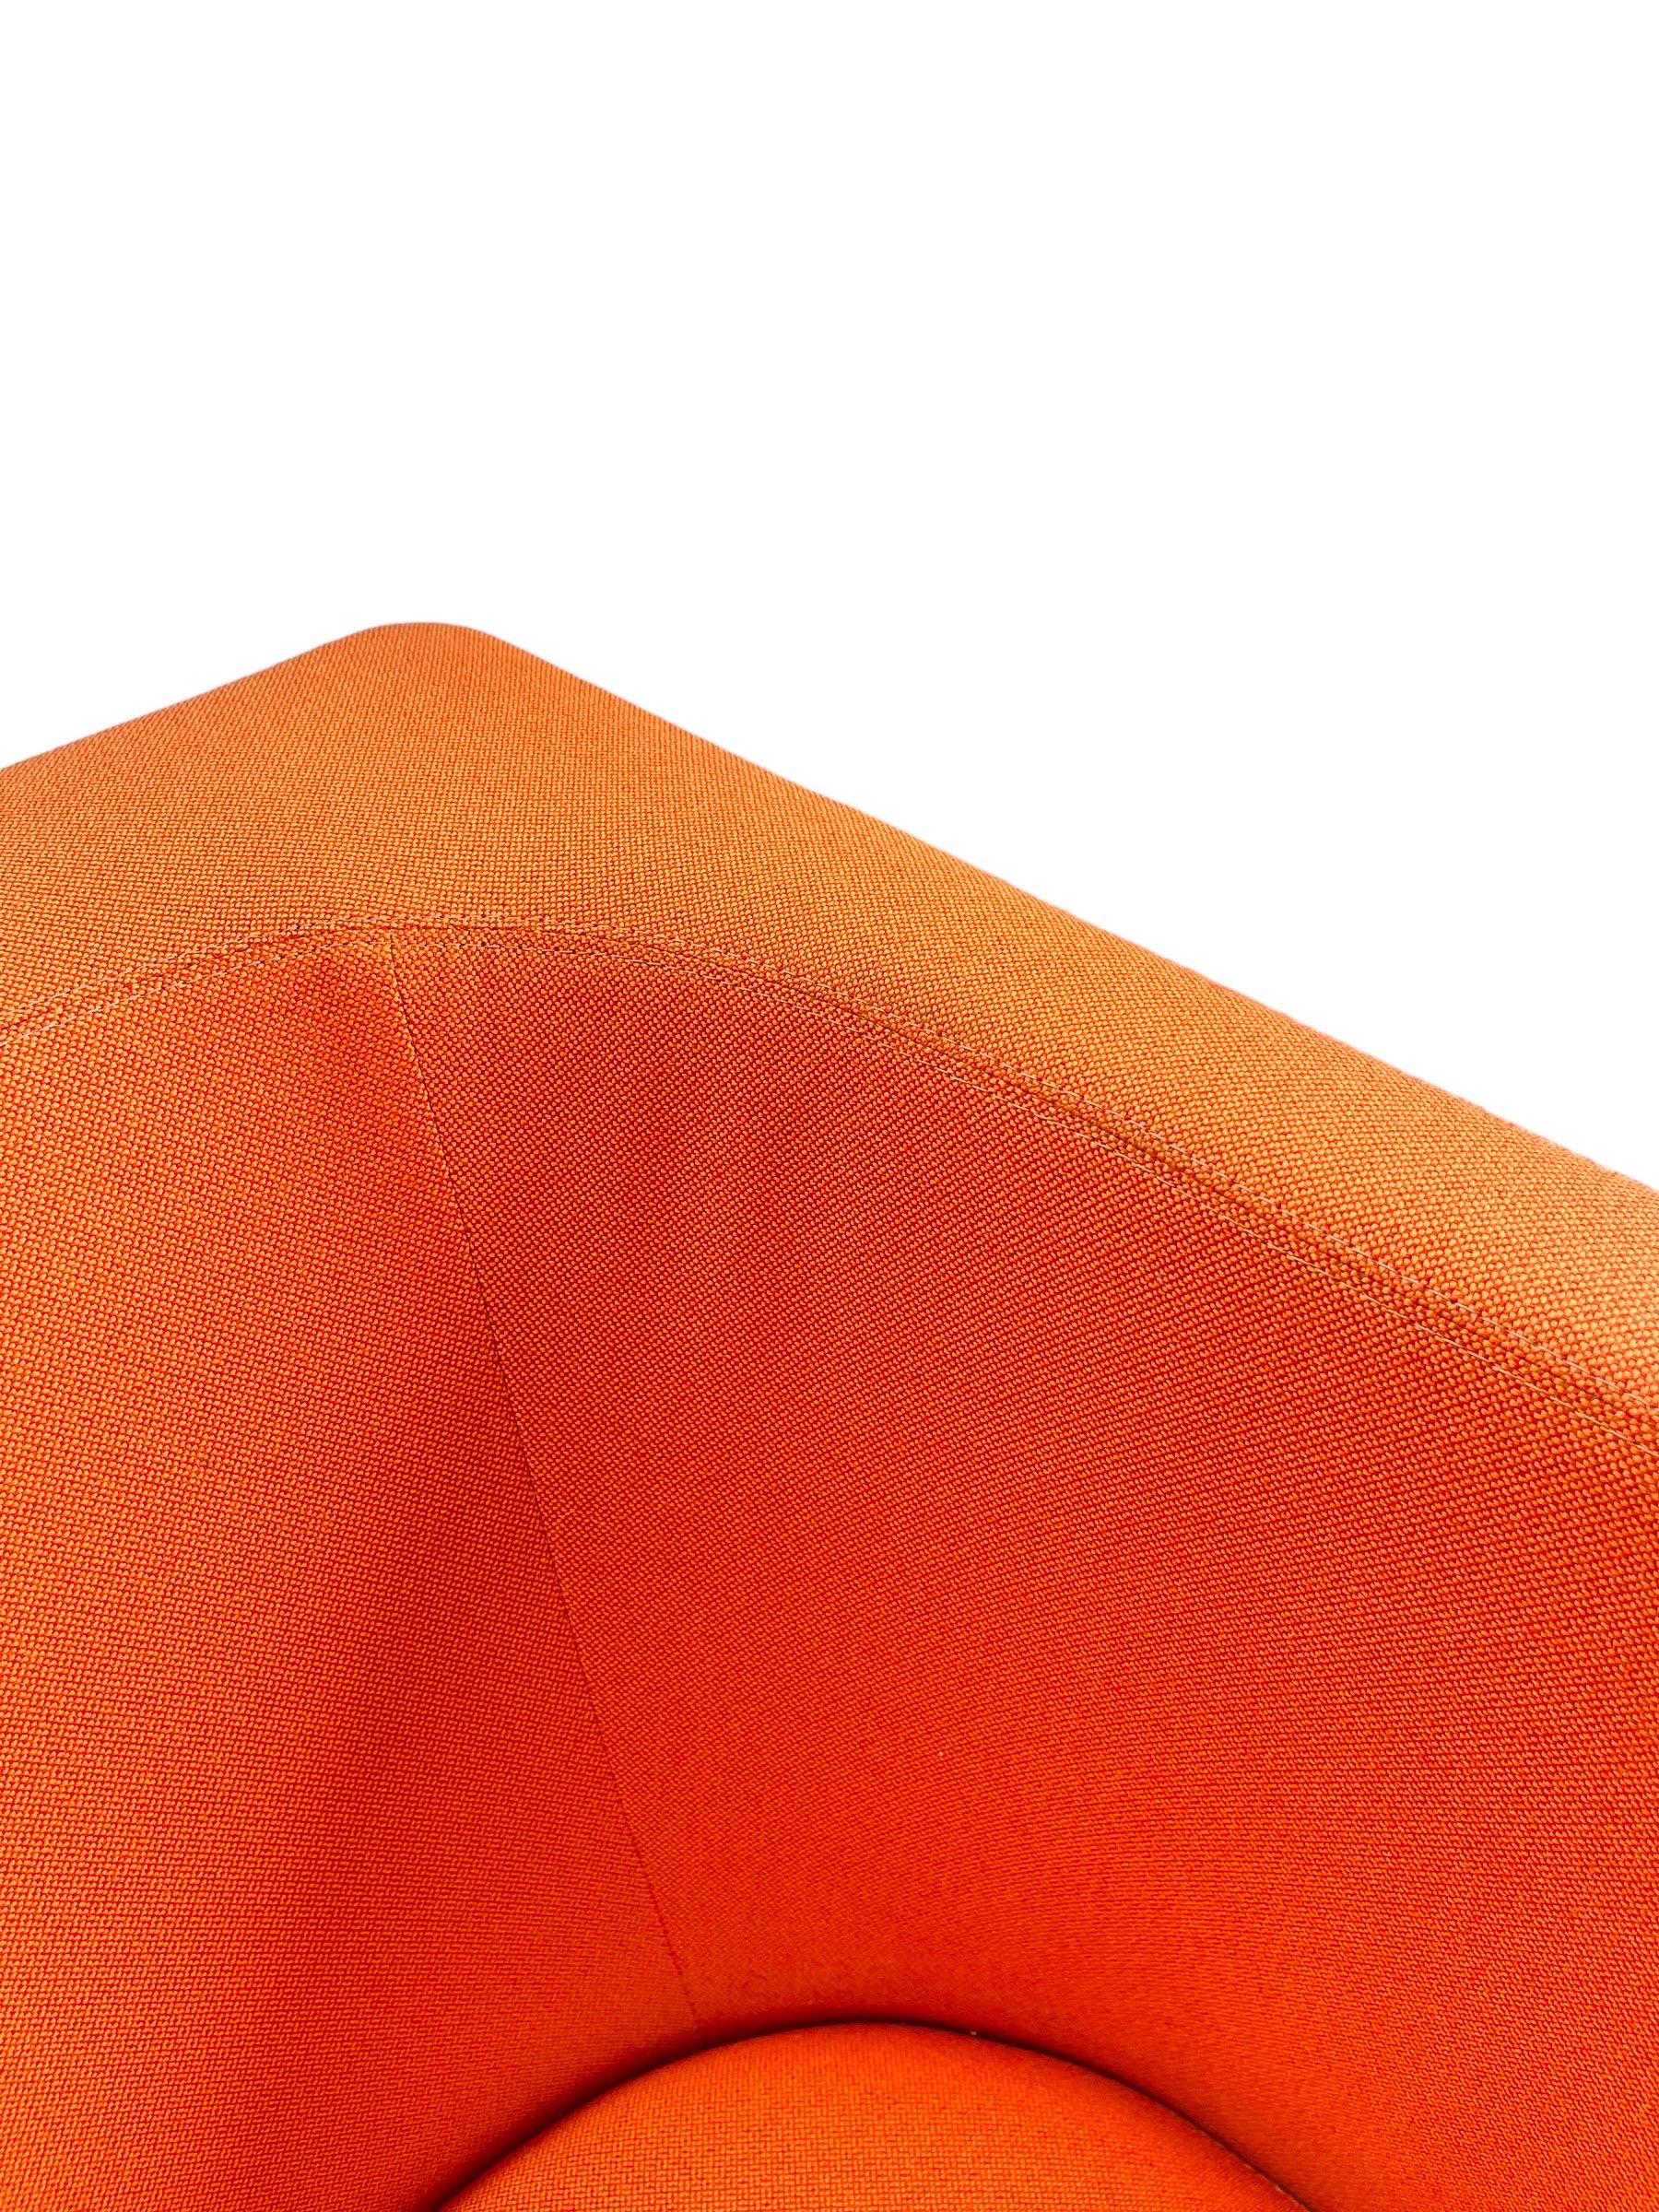 Steelcase Bivi Rumble Sitz Kollektion: Modernes Sofa in leuchtendem Orange 4